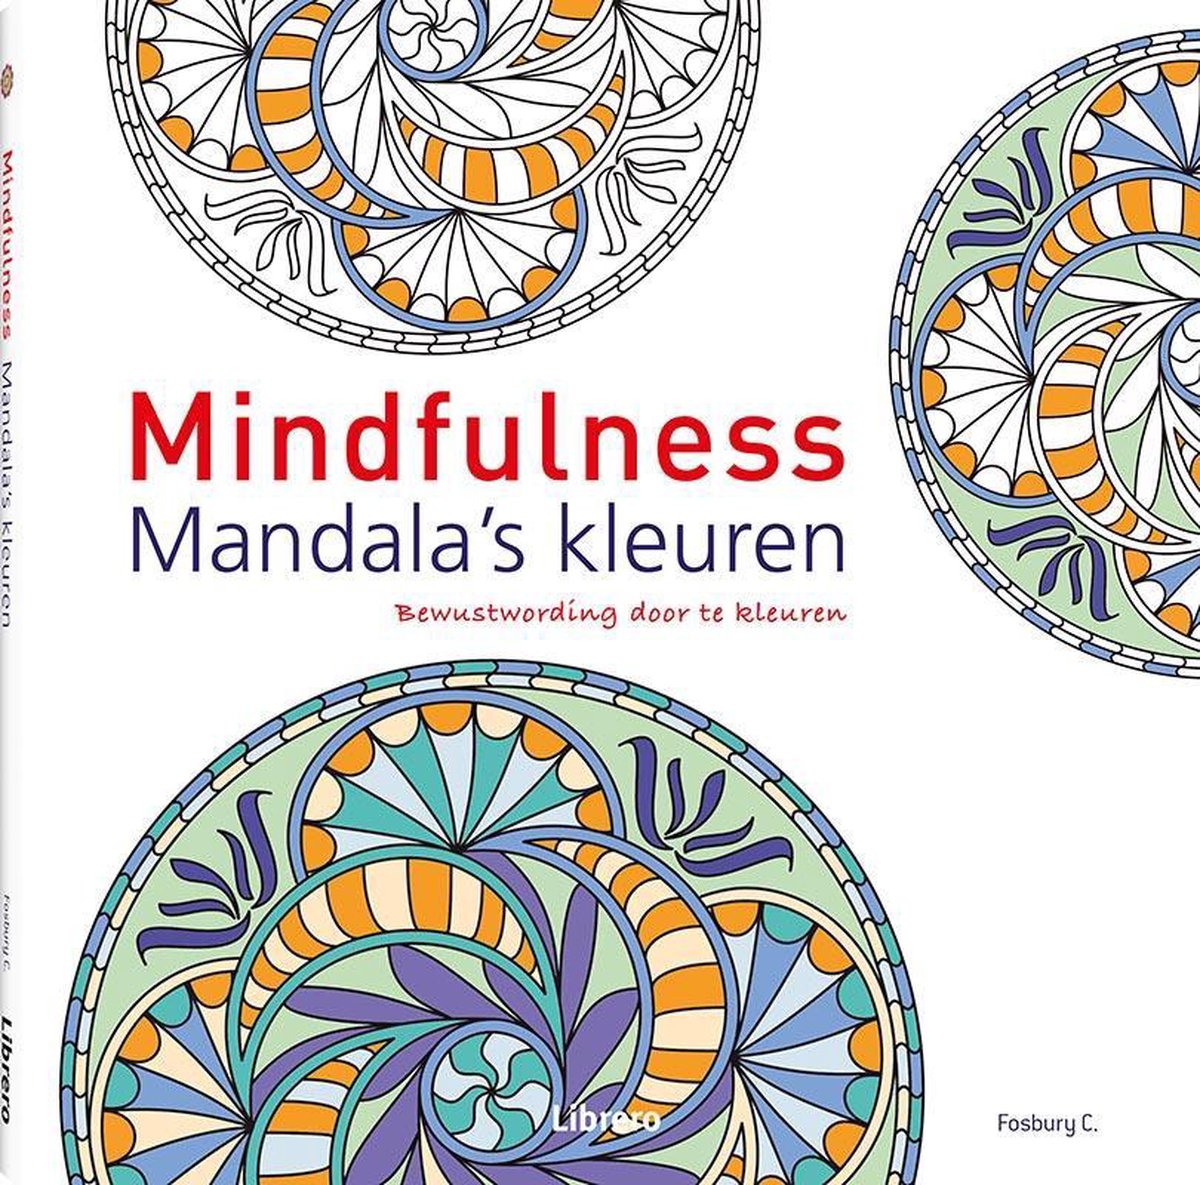 Mindfulness - Mandala's kleuren